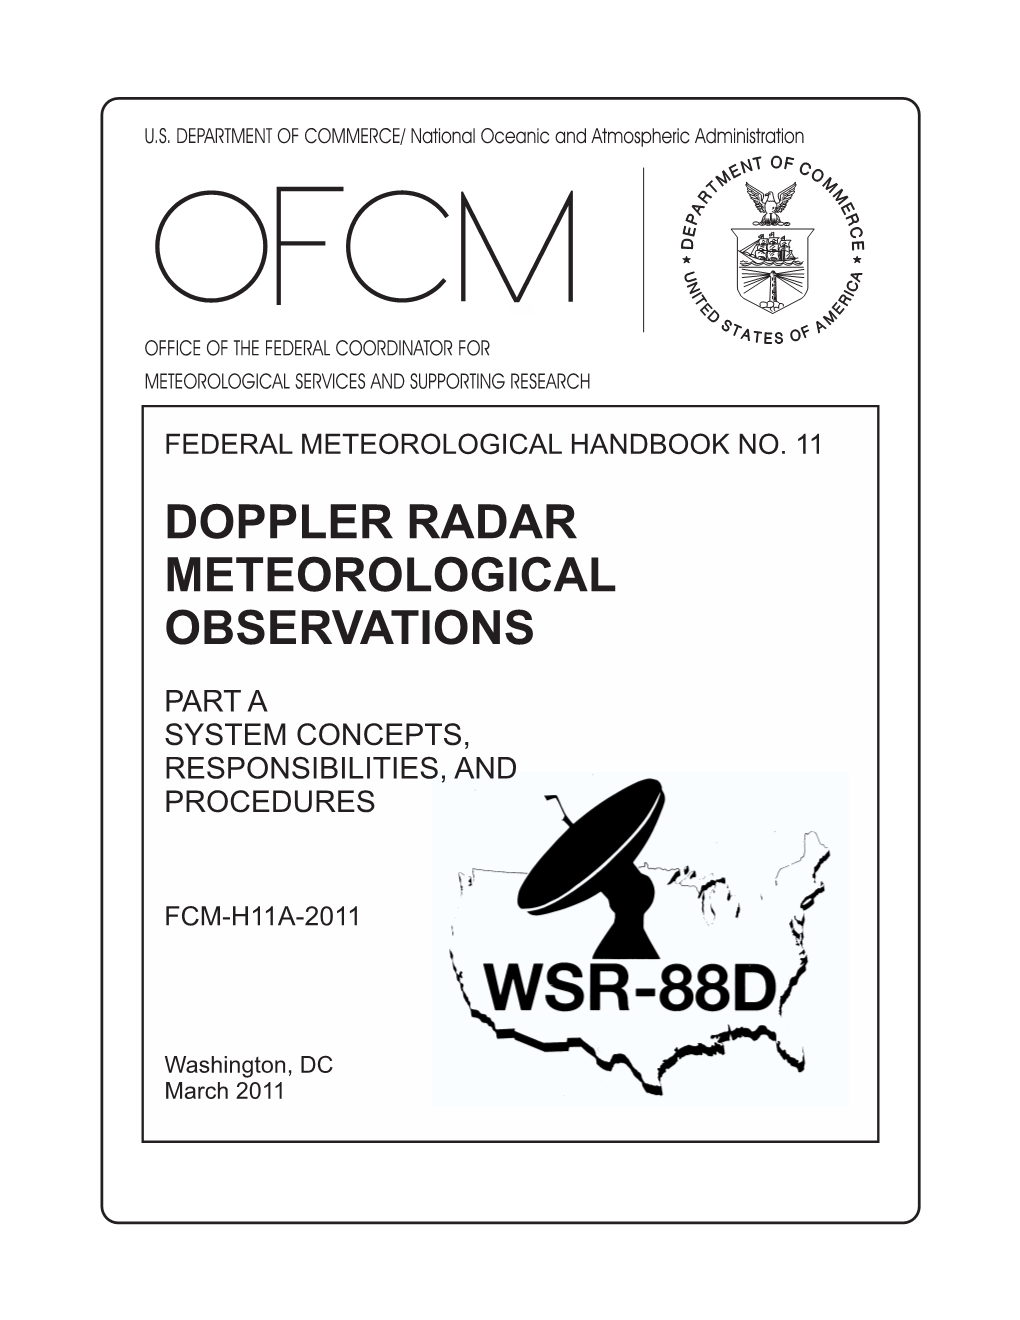 Doppler Radar Meteorological Observations